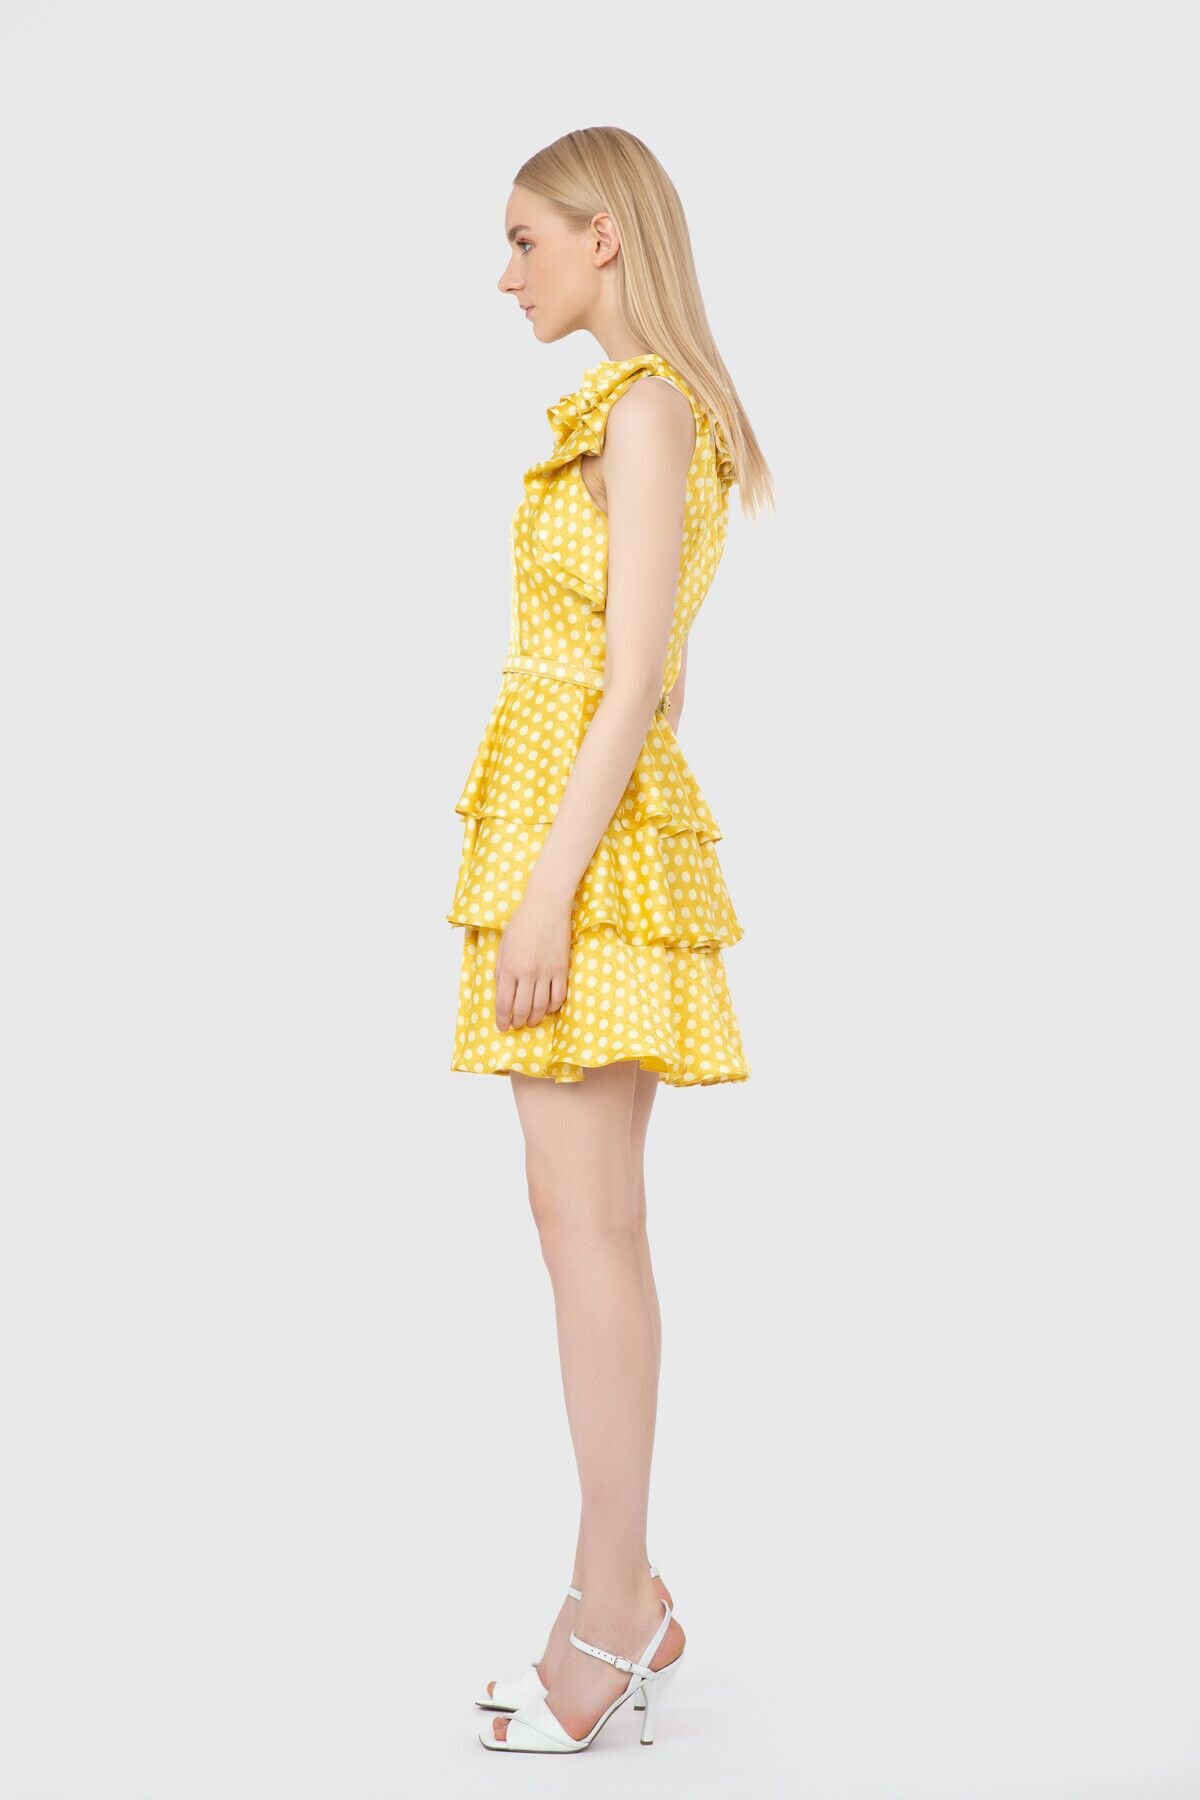 Ruffle Detailed Yellow Dress